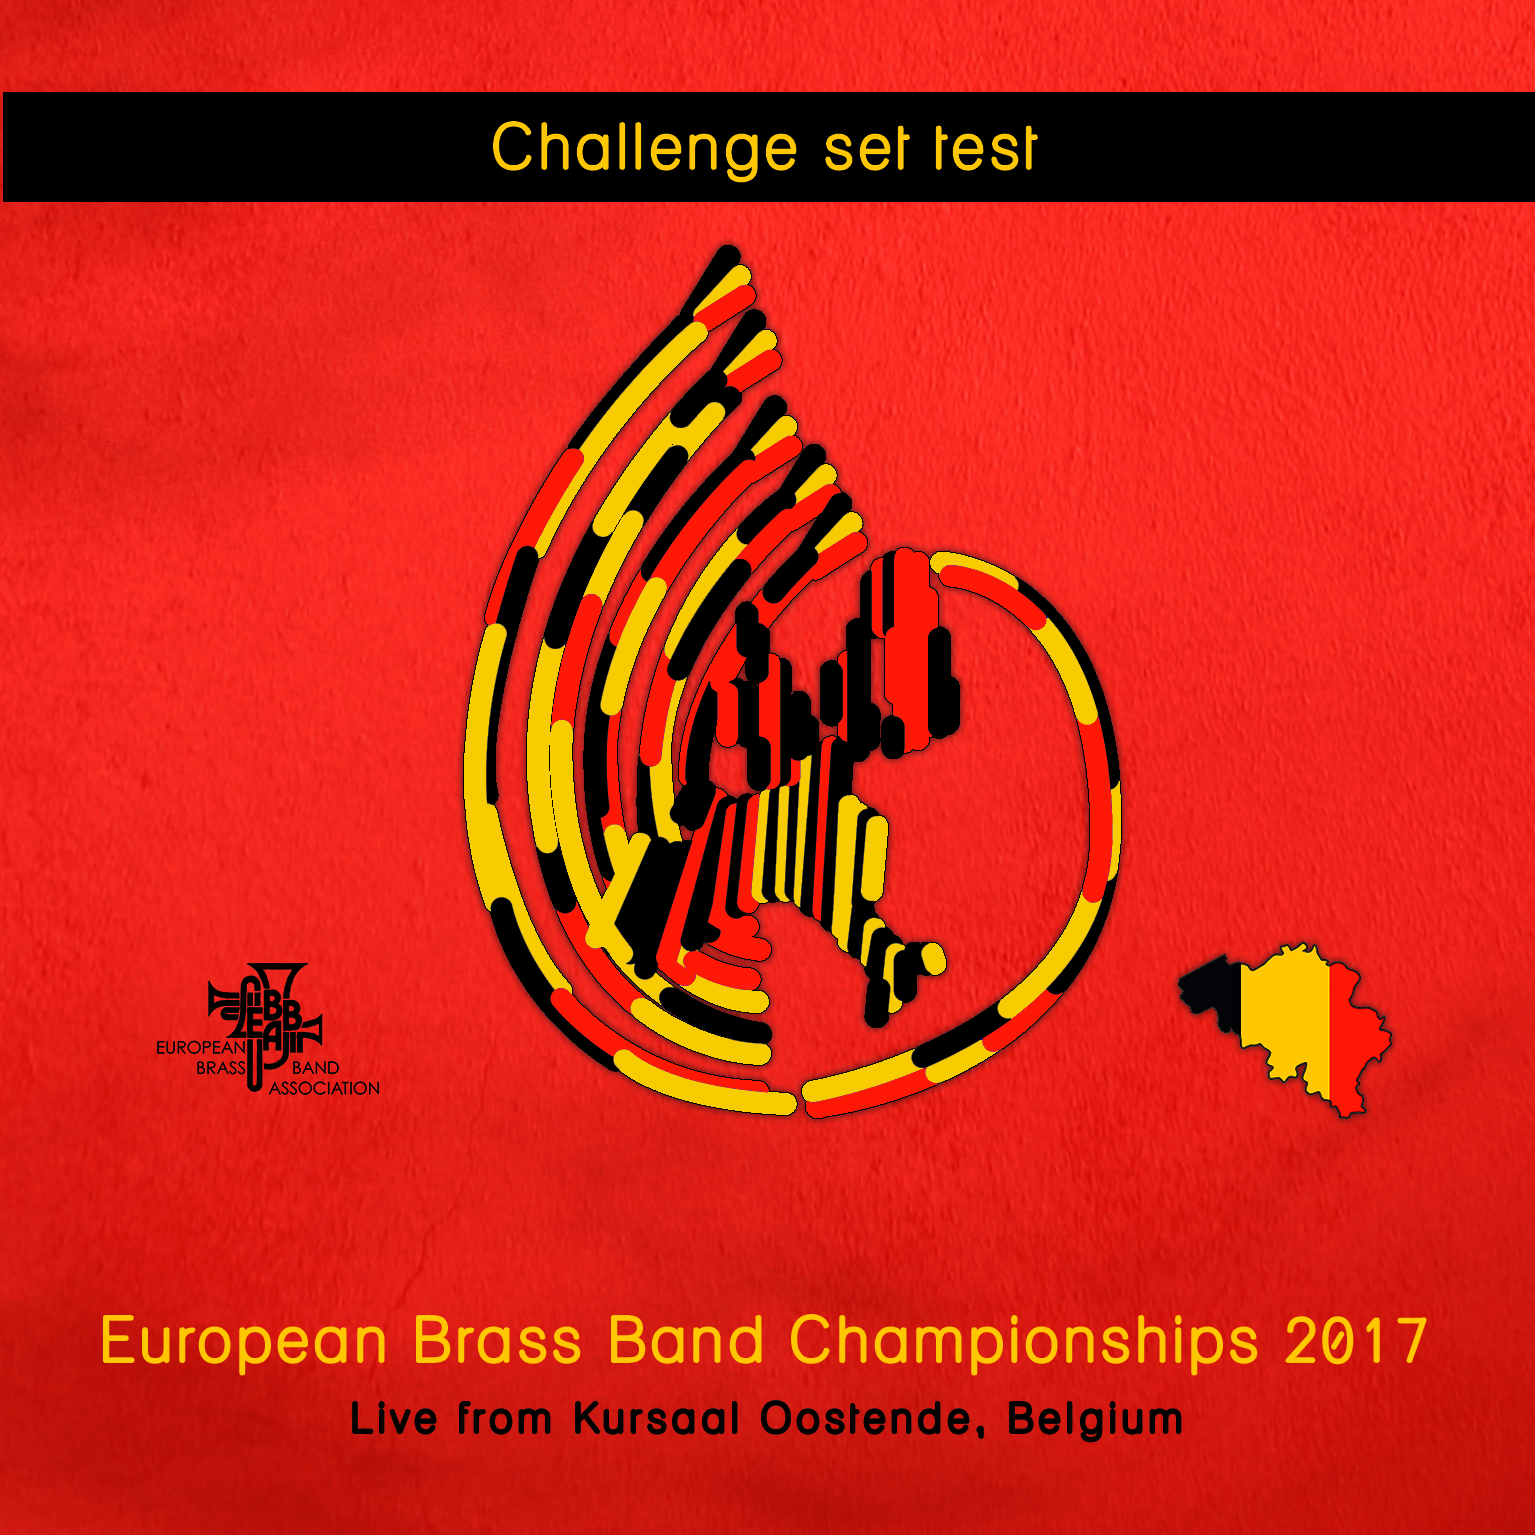 European Brass Band Championships 2017 - Challenge Section Set Test - Download